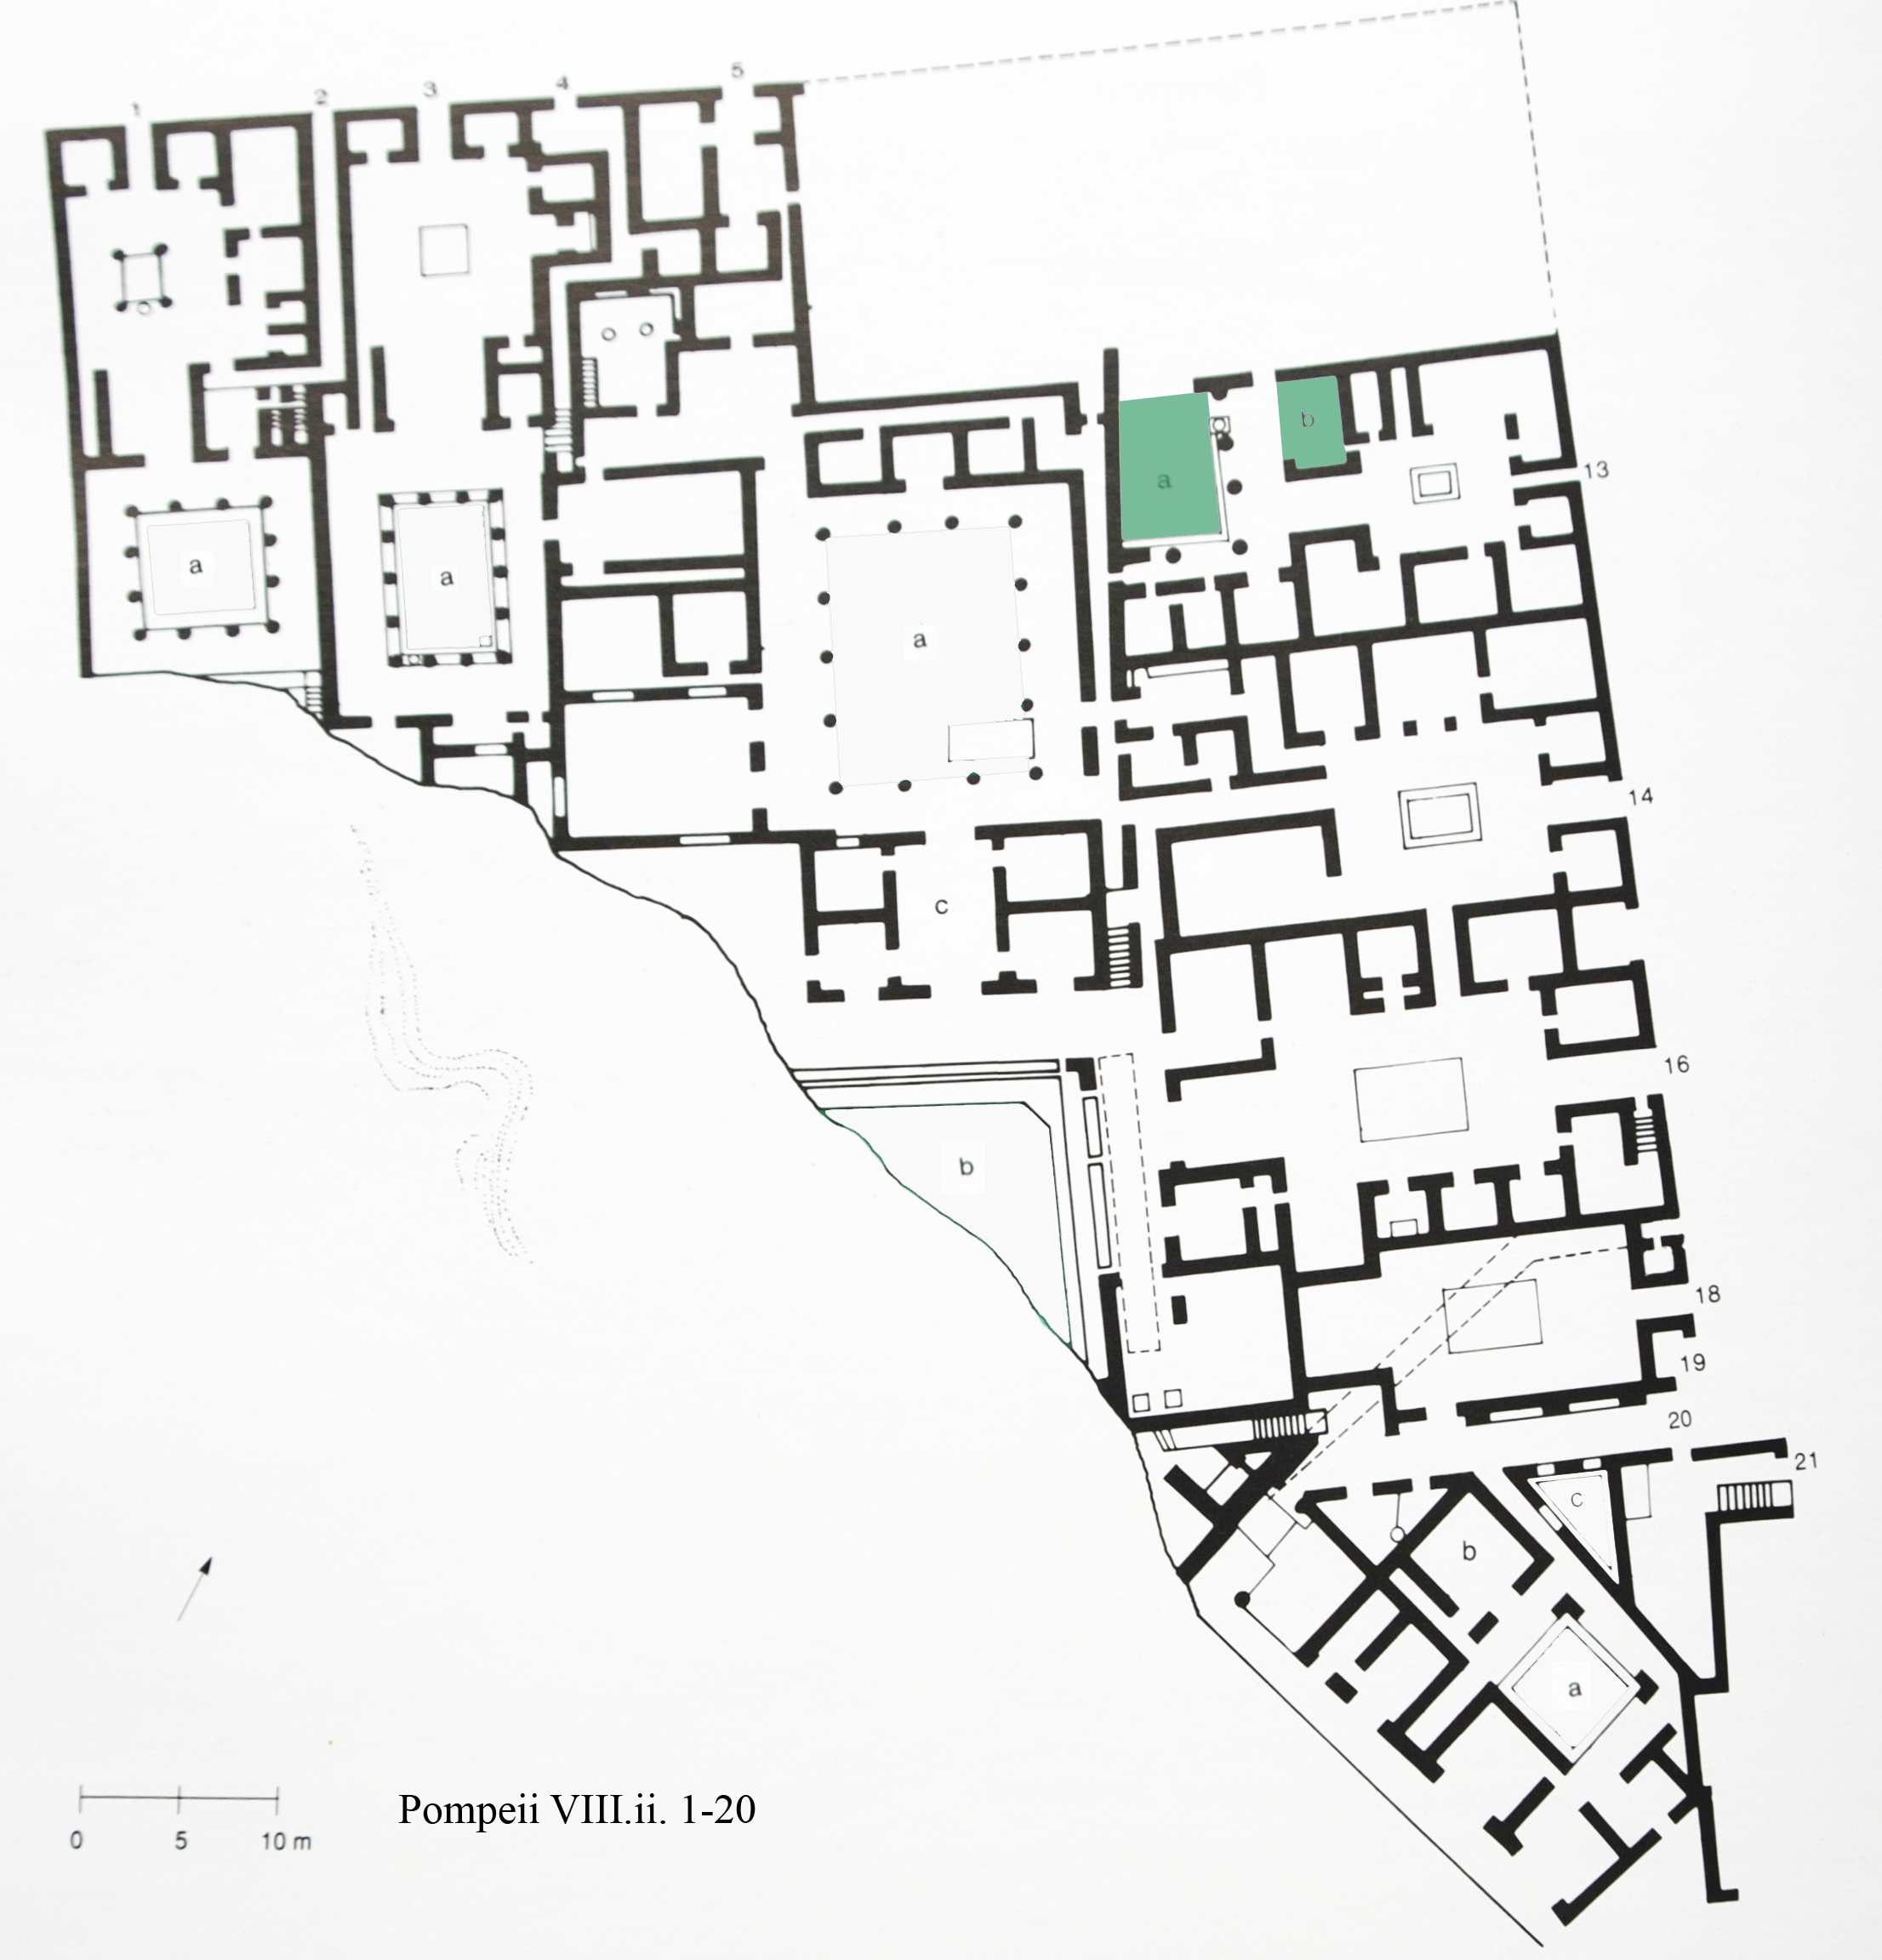 Plan of the Pompeii Region VIII, Insula II, 1-20